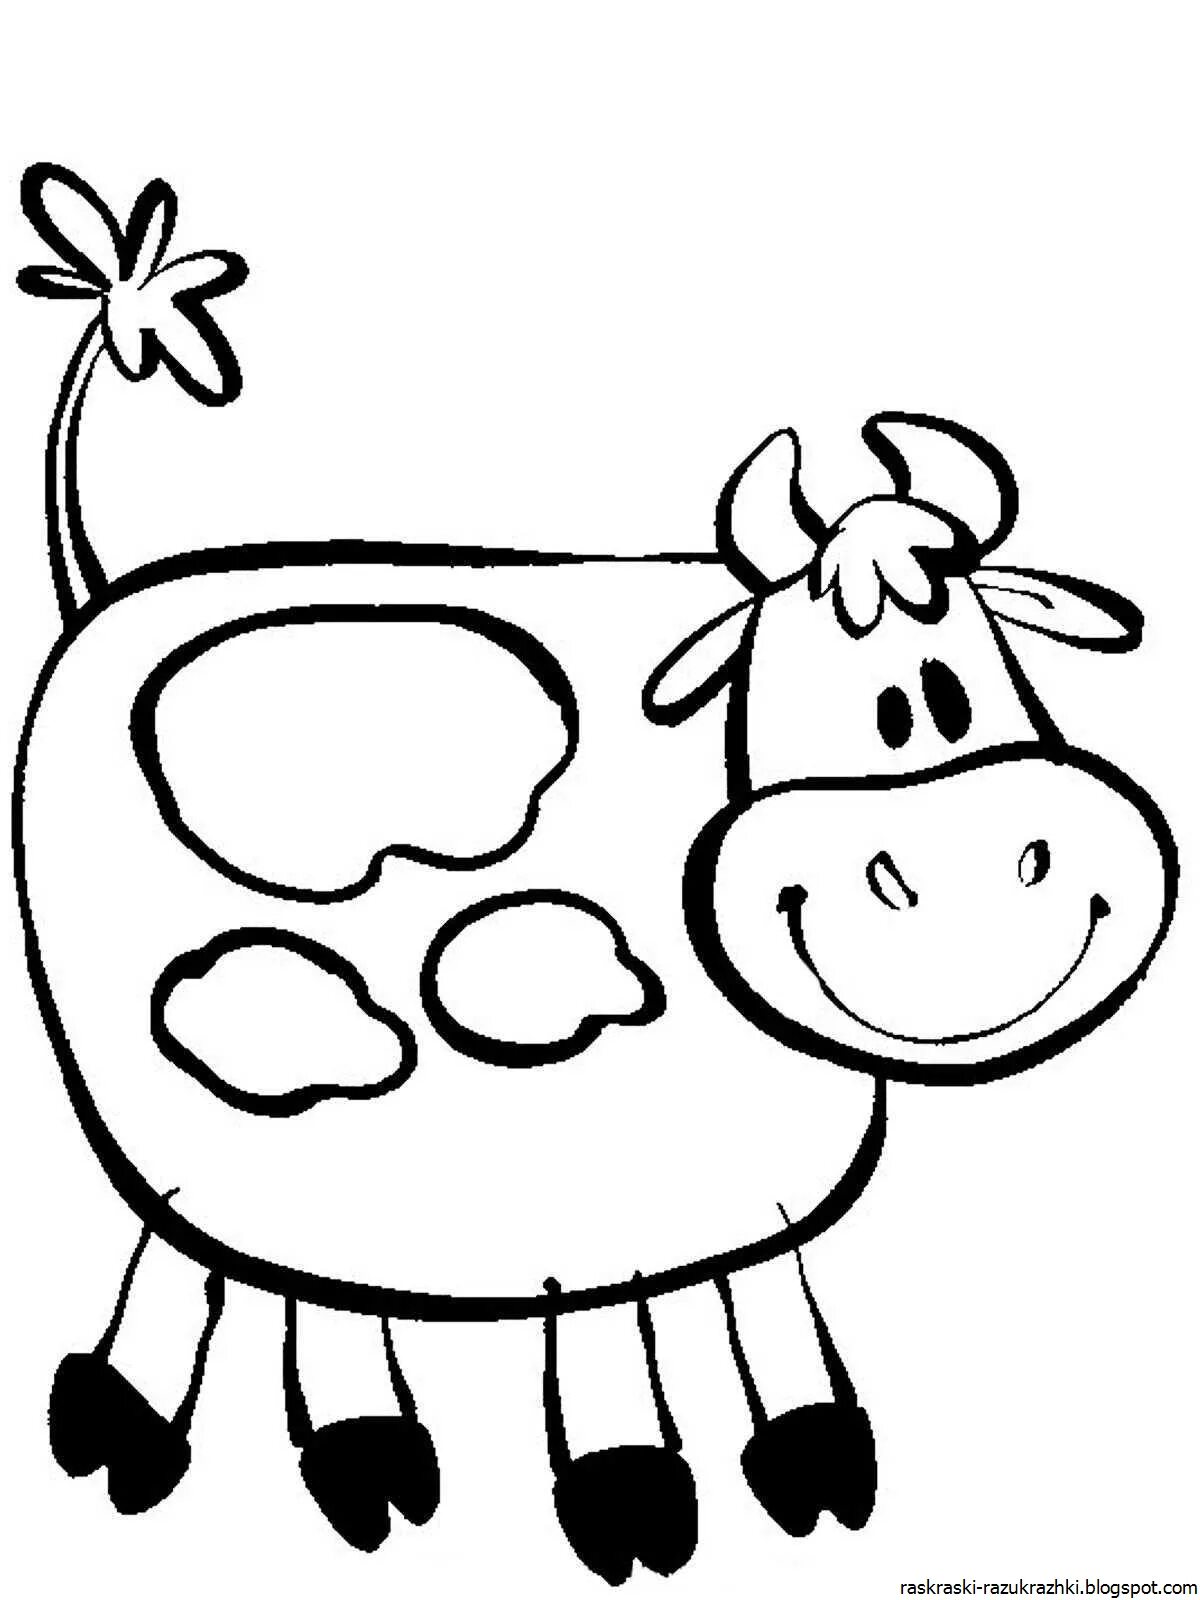 Раскраска корова. Корова раскраска для детей. Корова раскраска для малышей. Коровка раскраска для детей.